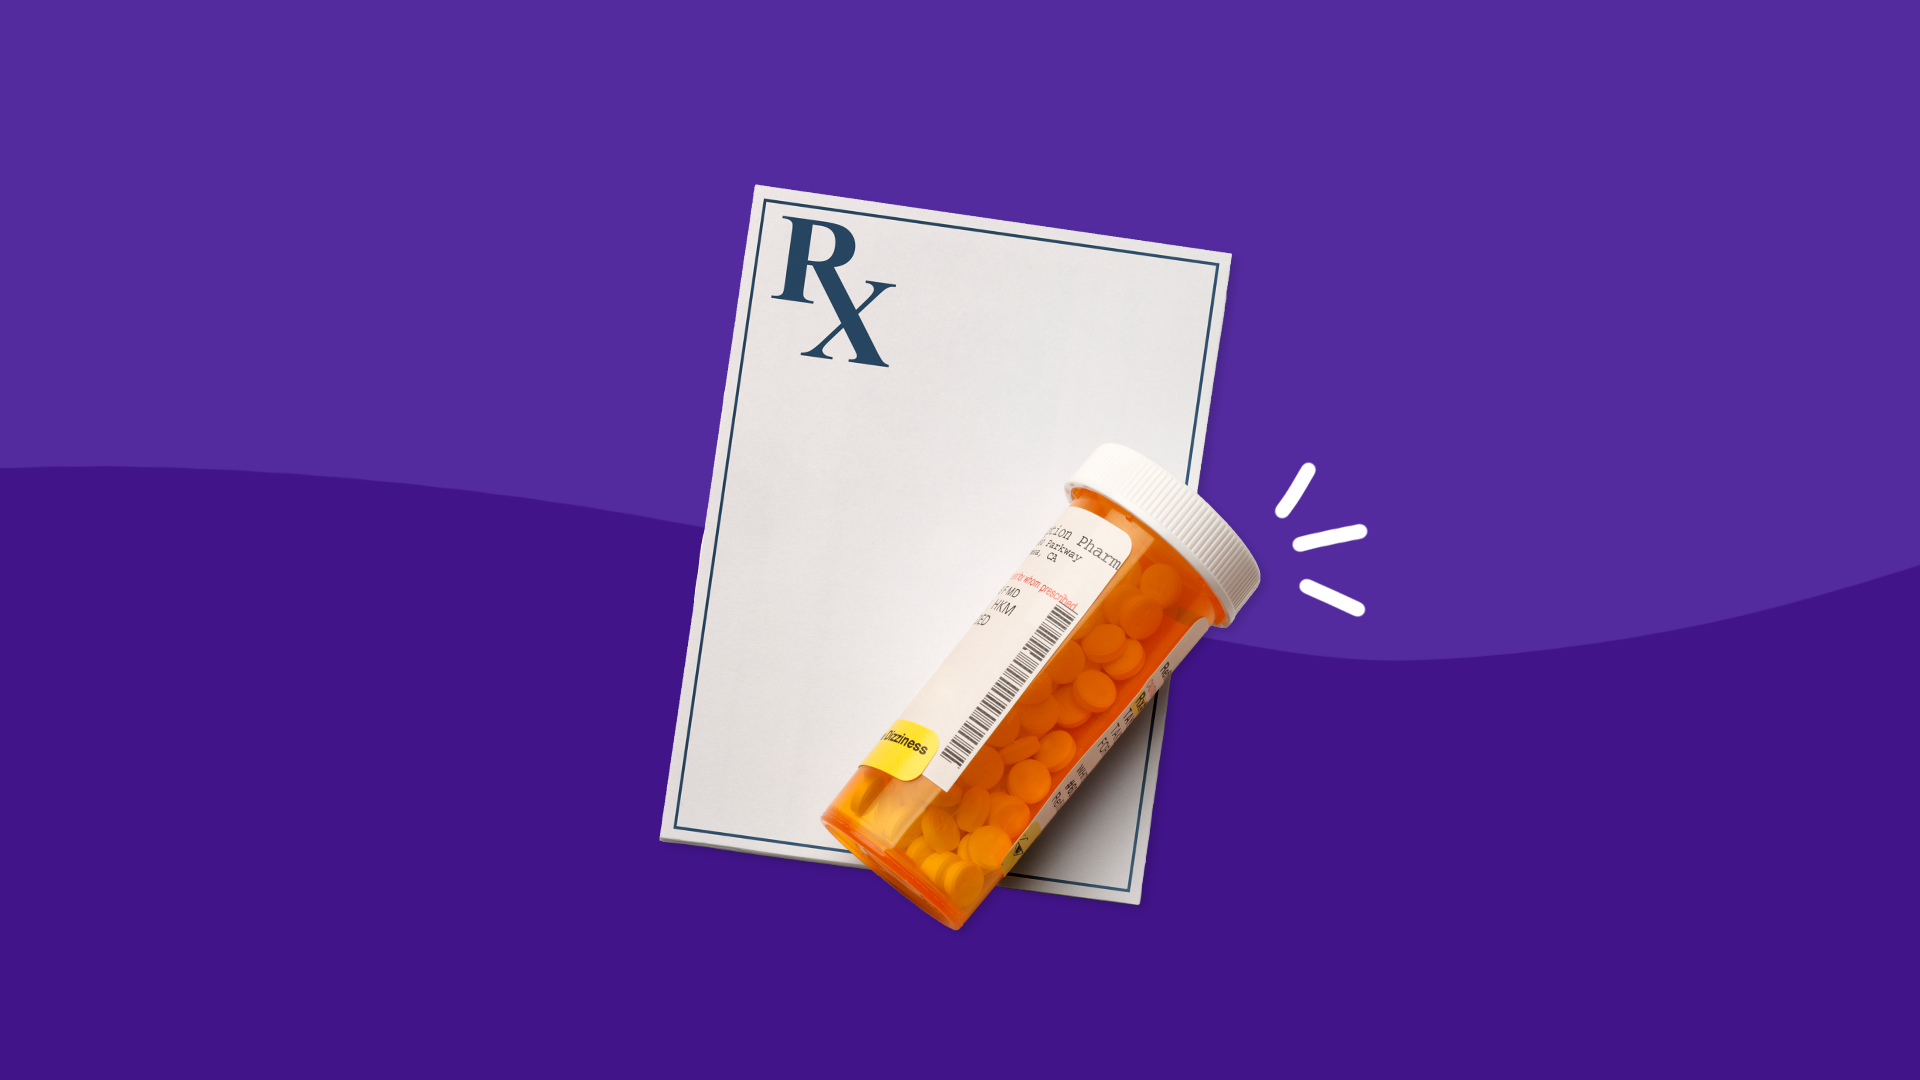 Prescription pad and bottle representingWellbutrin side effects